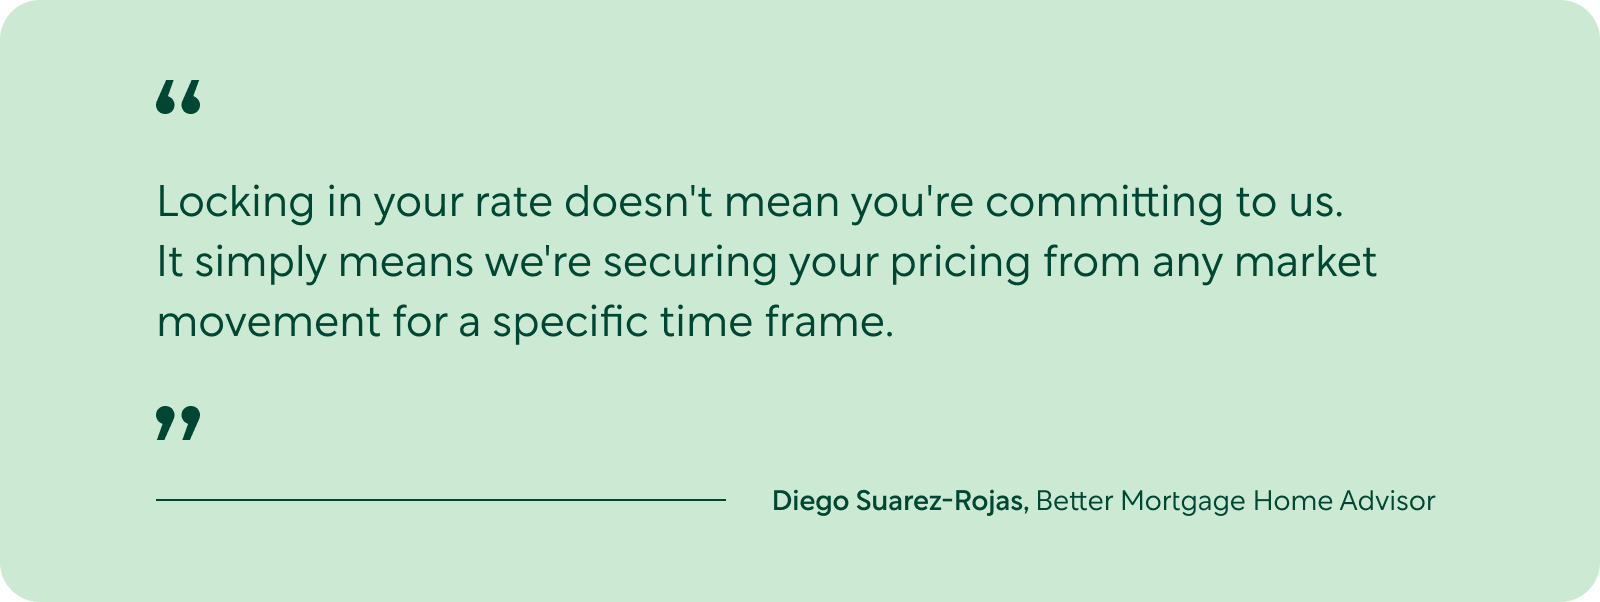 Quote from Diego Suarez-Rojas